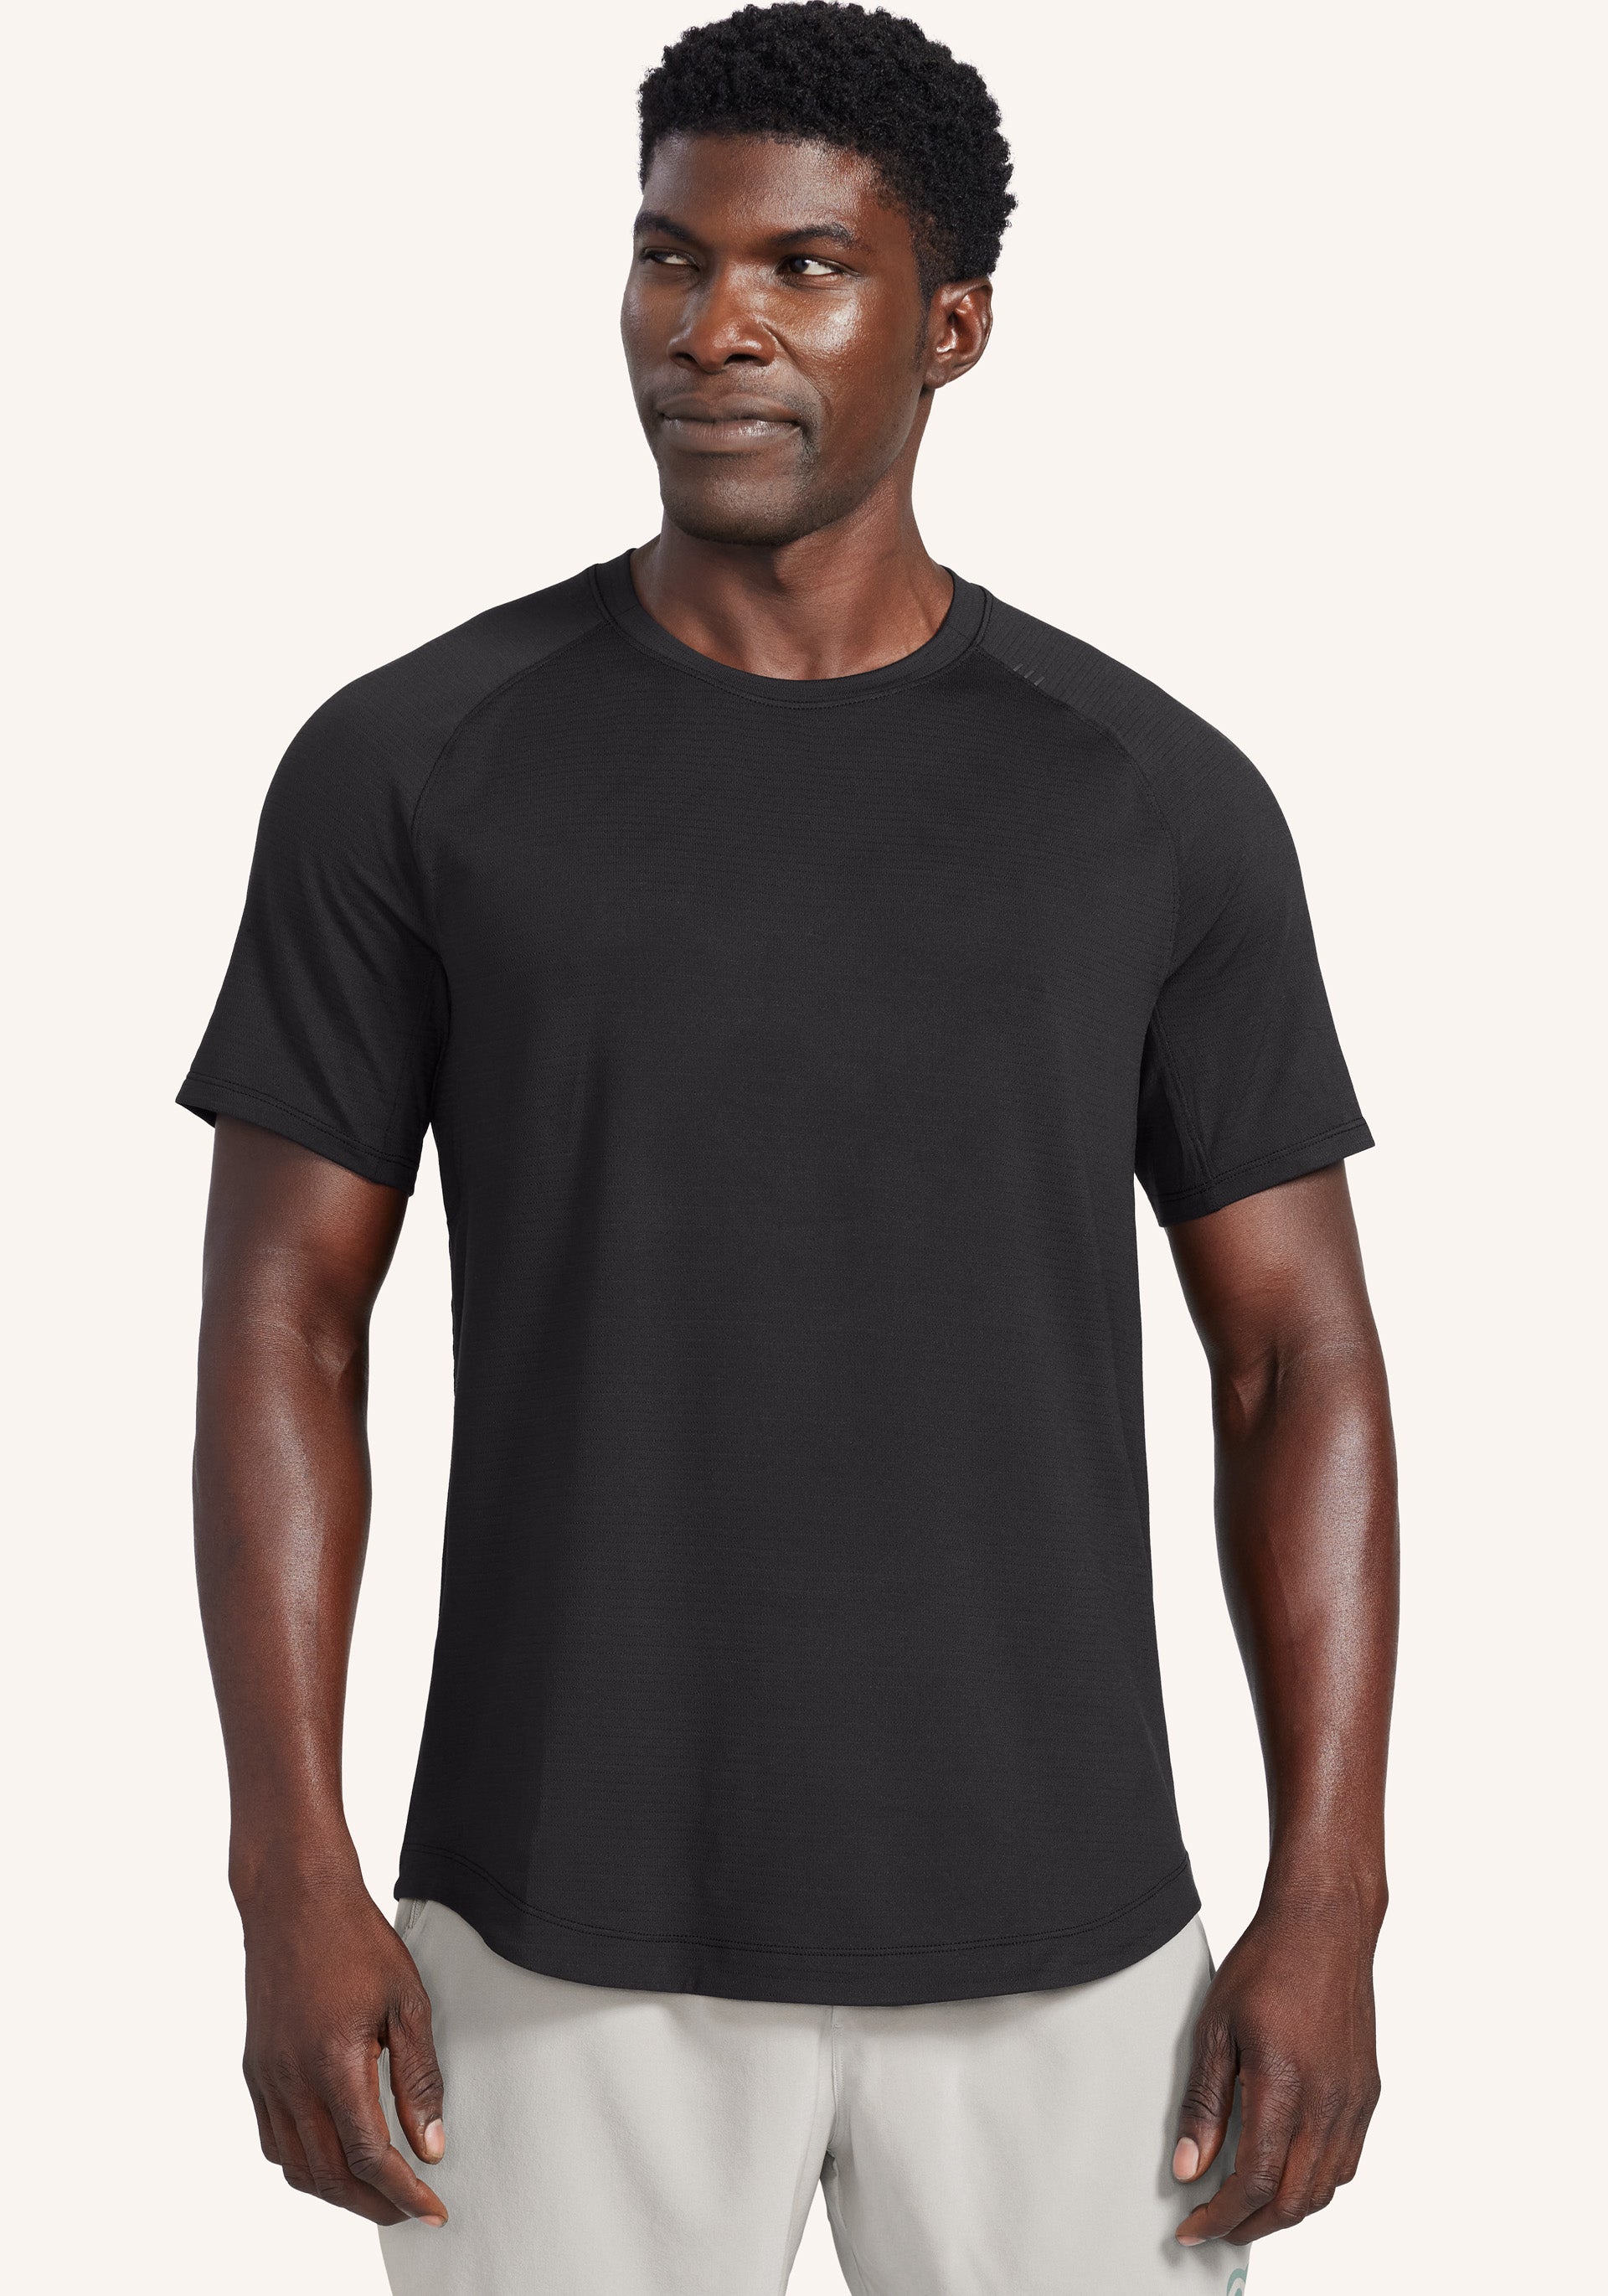 VOGO Athletica Black Active T-Shirt Size L - 81% off